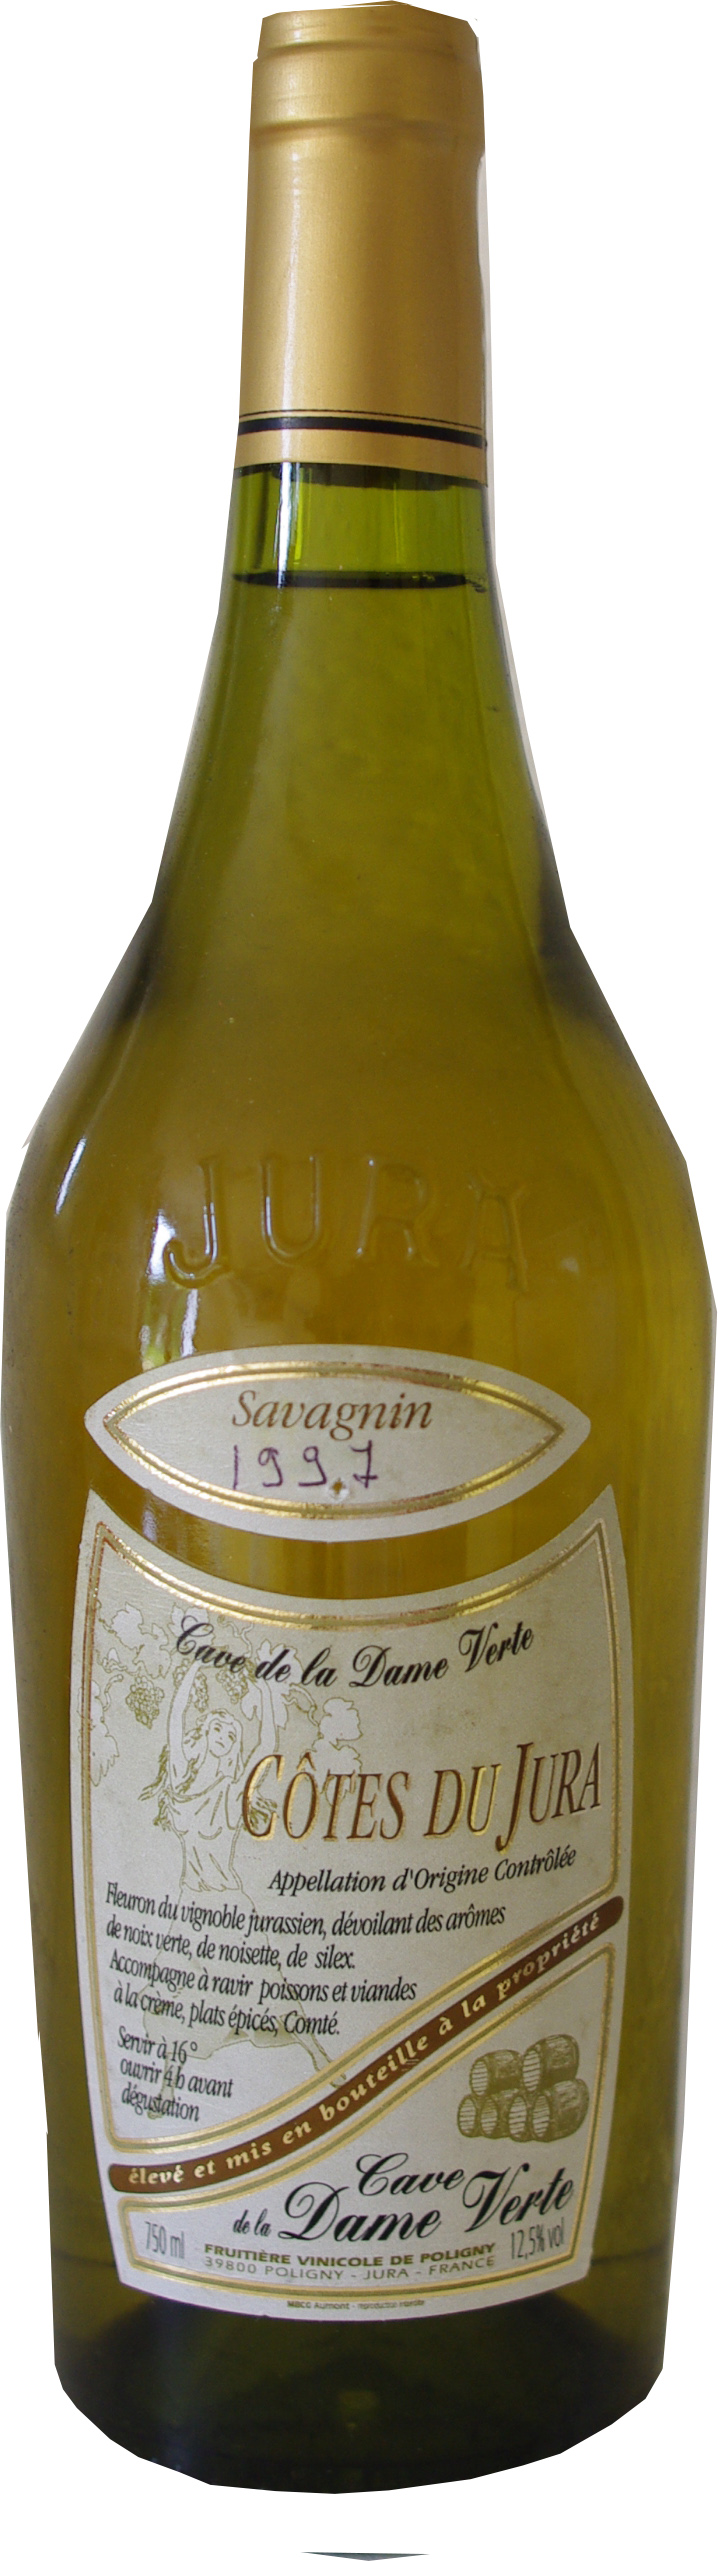 Jura bottle 2